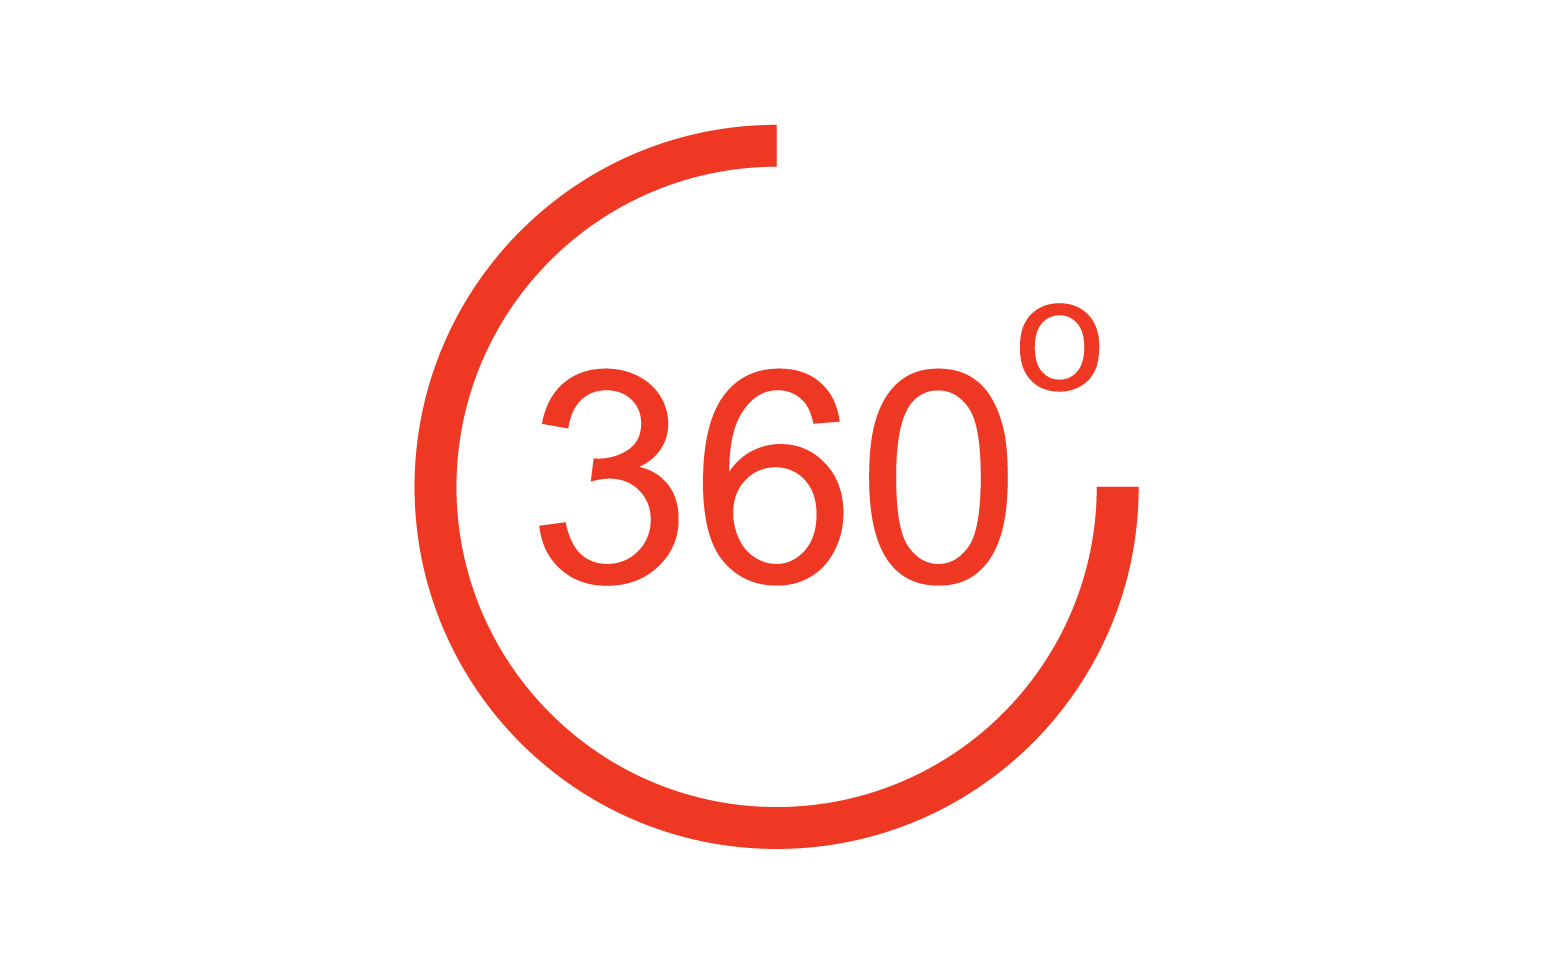 360 degree angle rotation icon symbol logo version v40